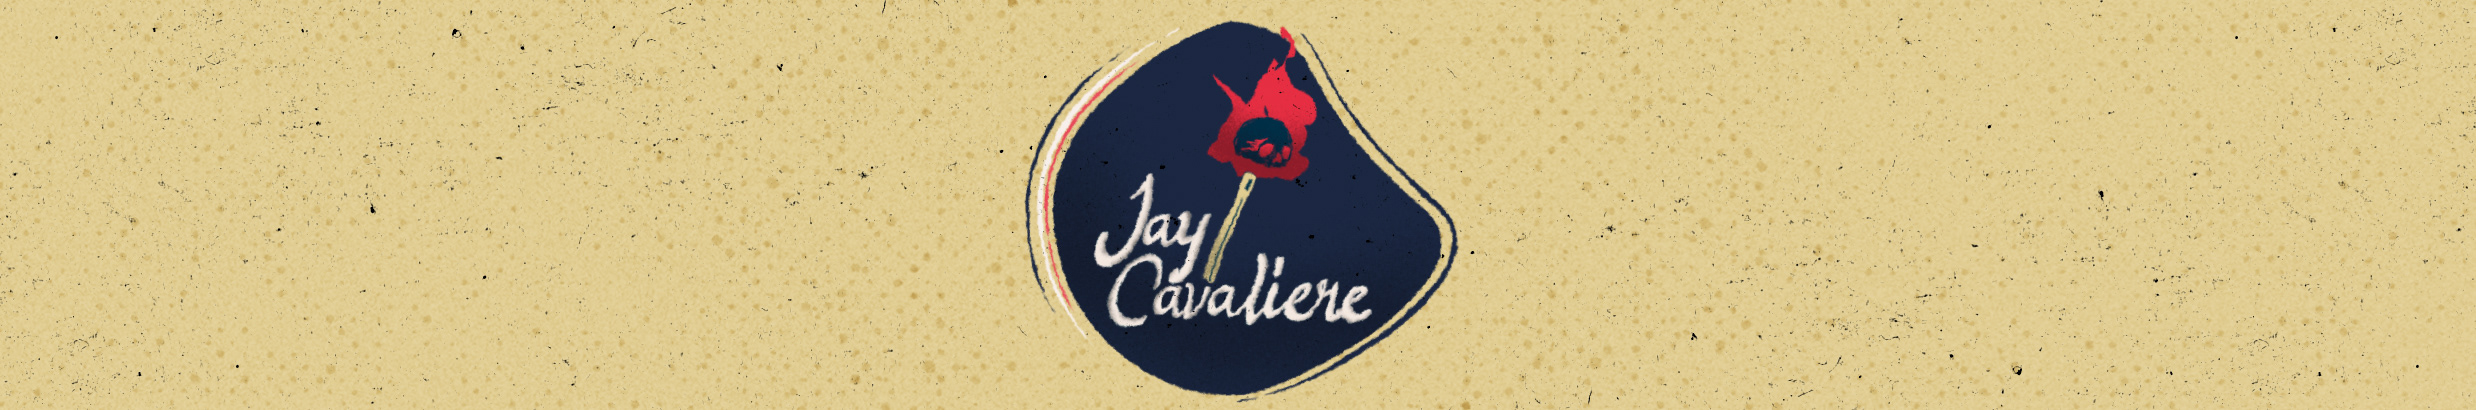 Jay Cavaliere profil başlığı